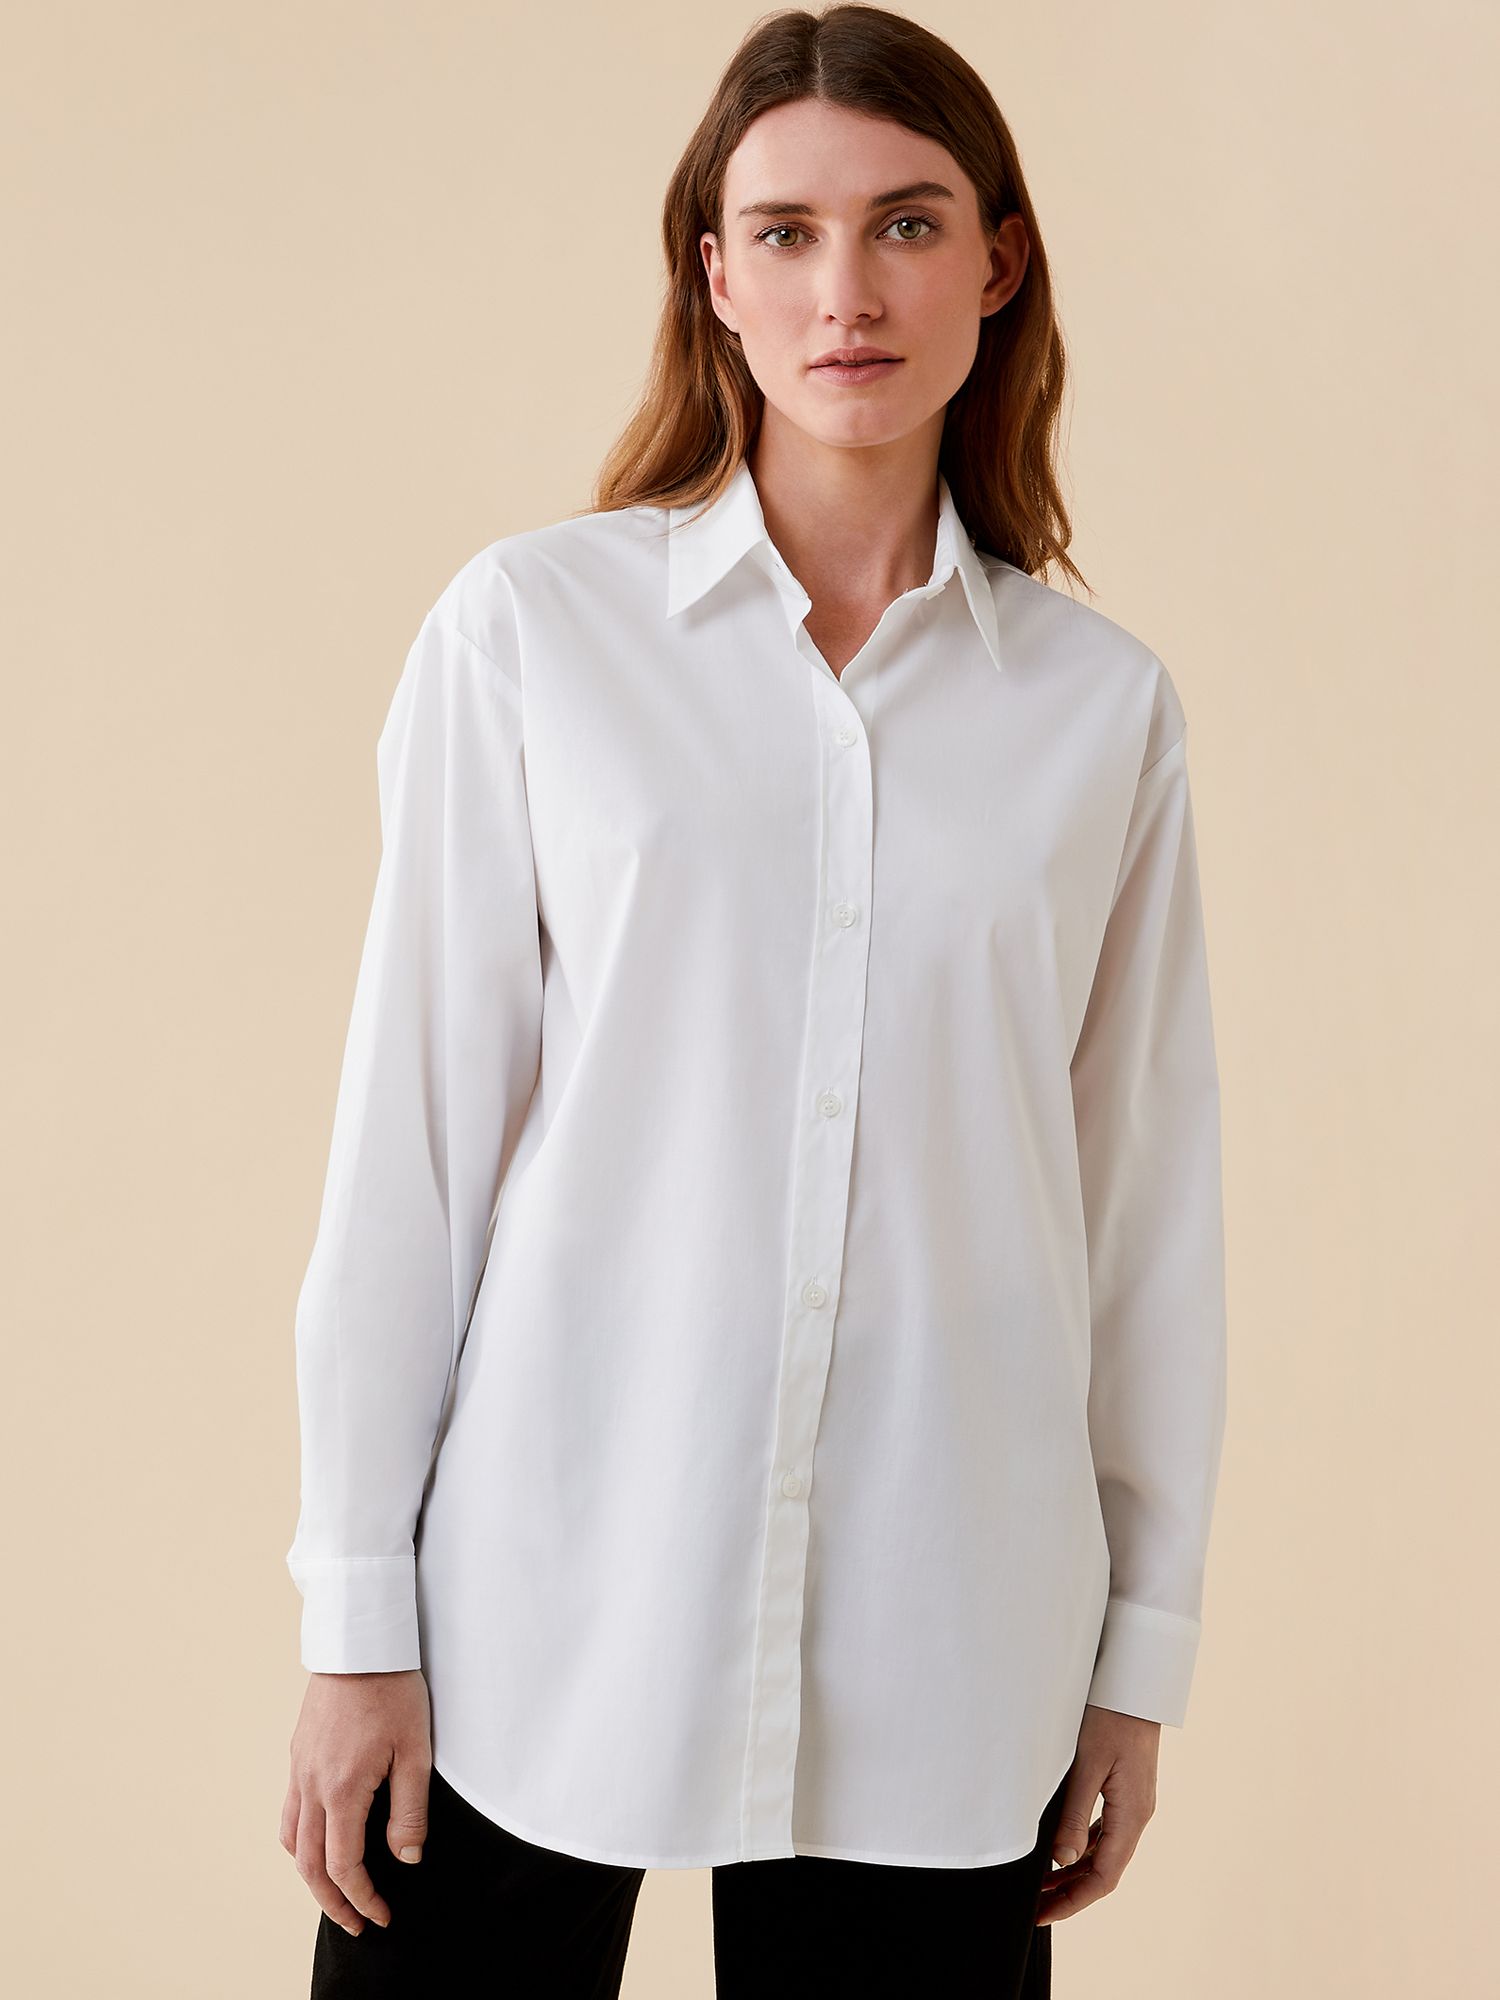 Finery Jane Stretch Cotton Shirt, White at John Lewis & Partners